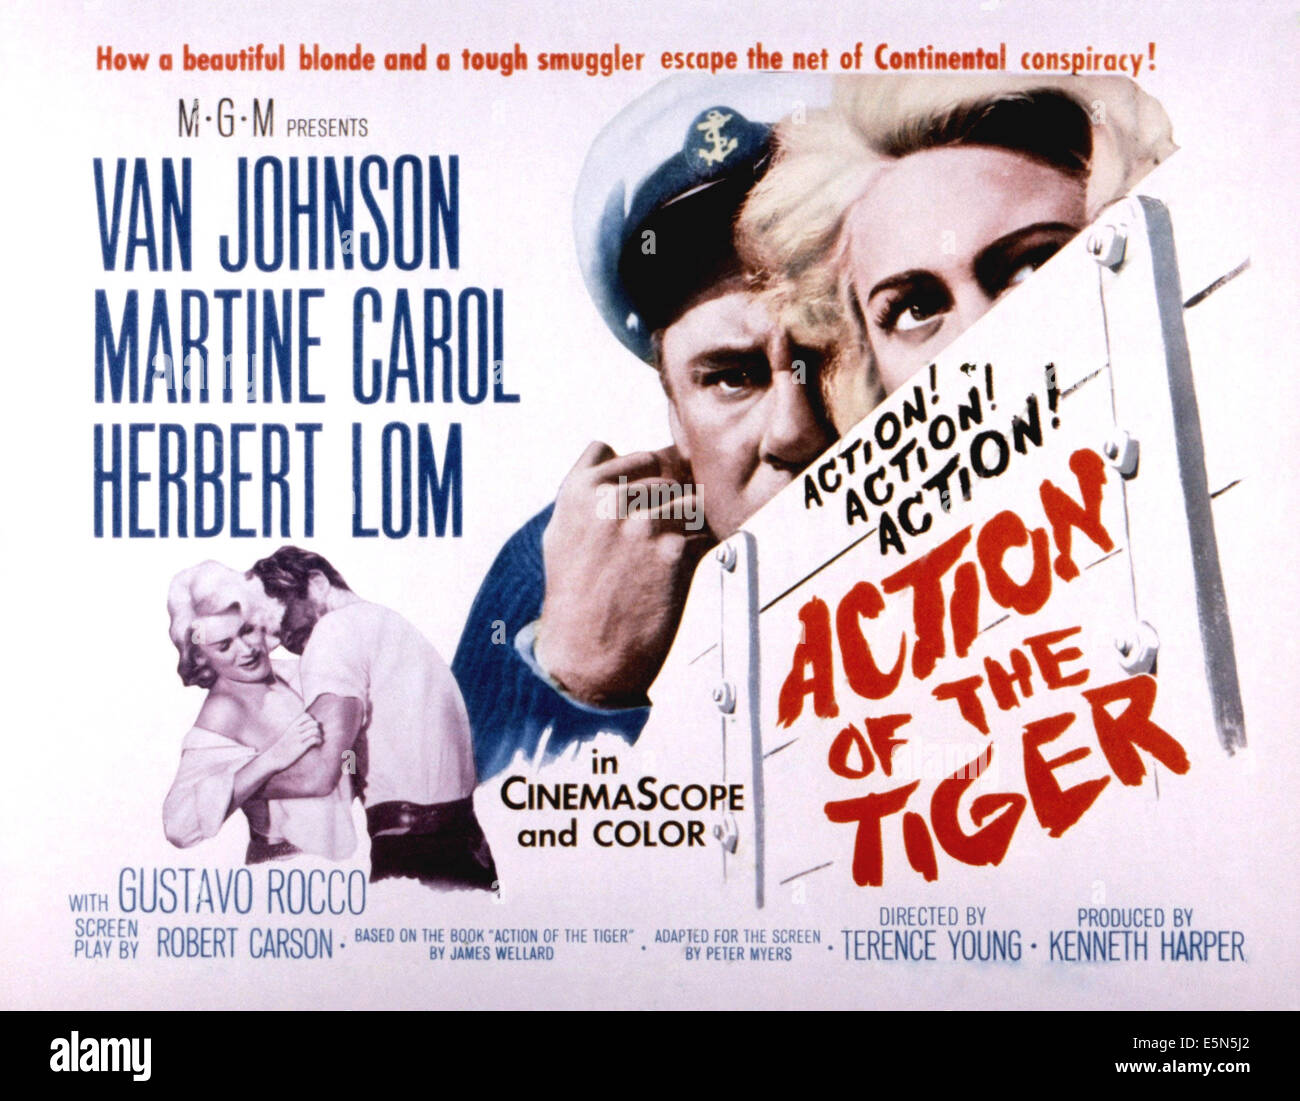 ACTION DE LA TIGER, Van Johnson, Martine Carol, 1957 Banque D'Images